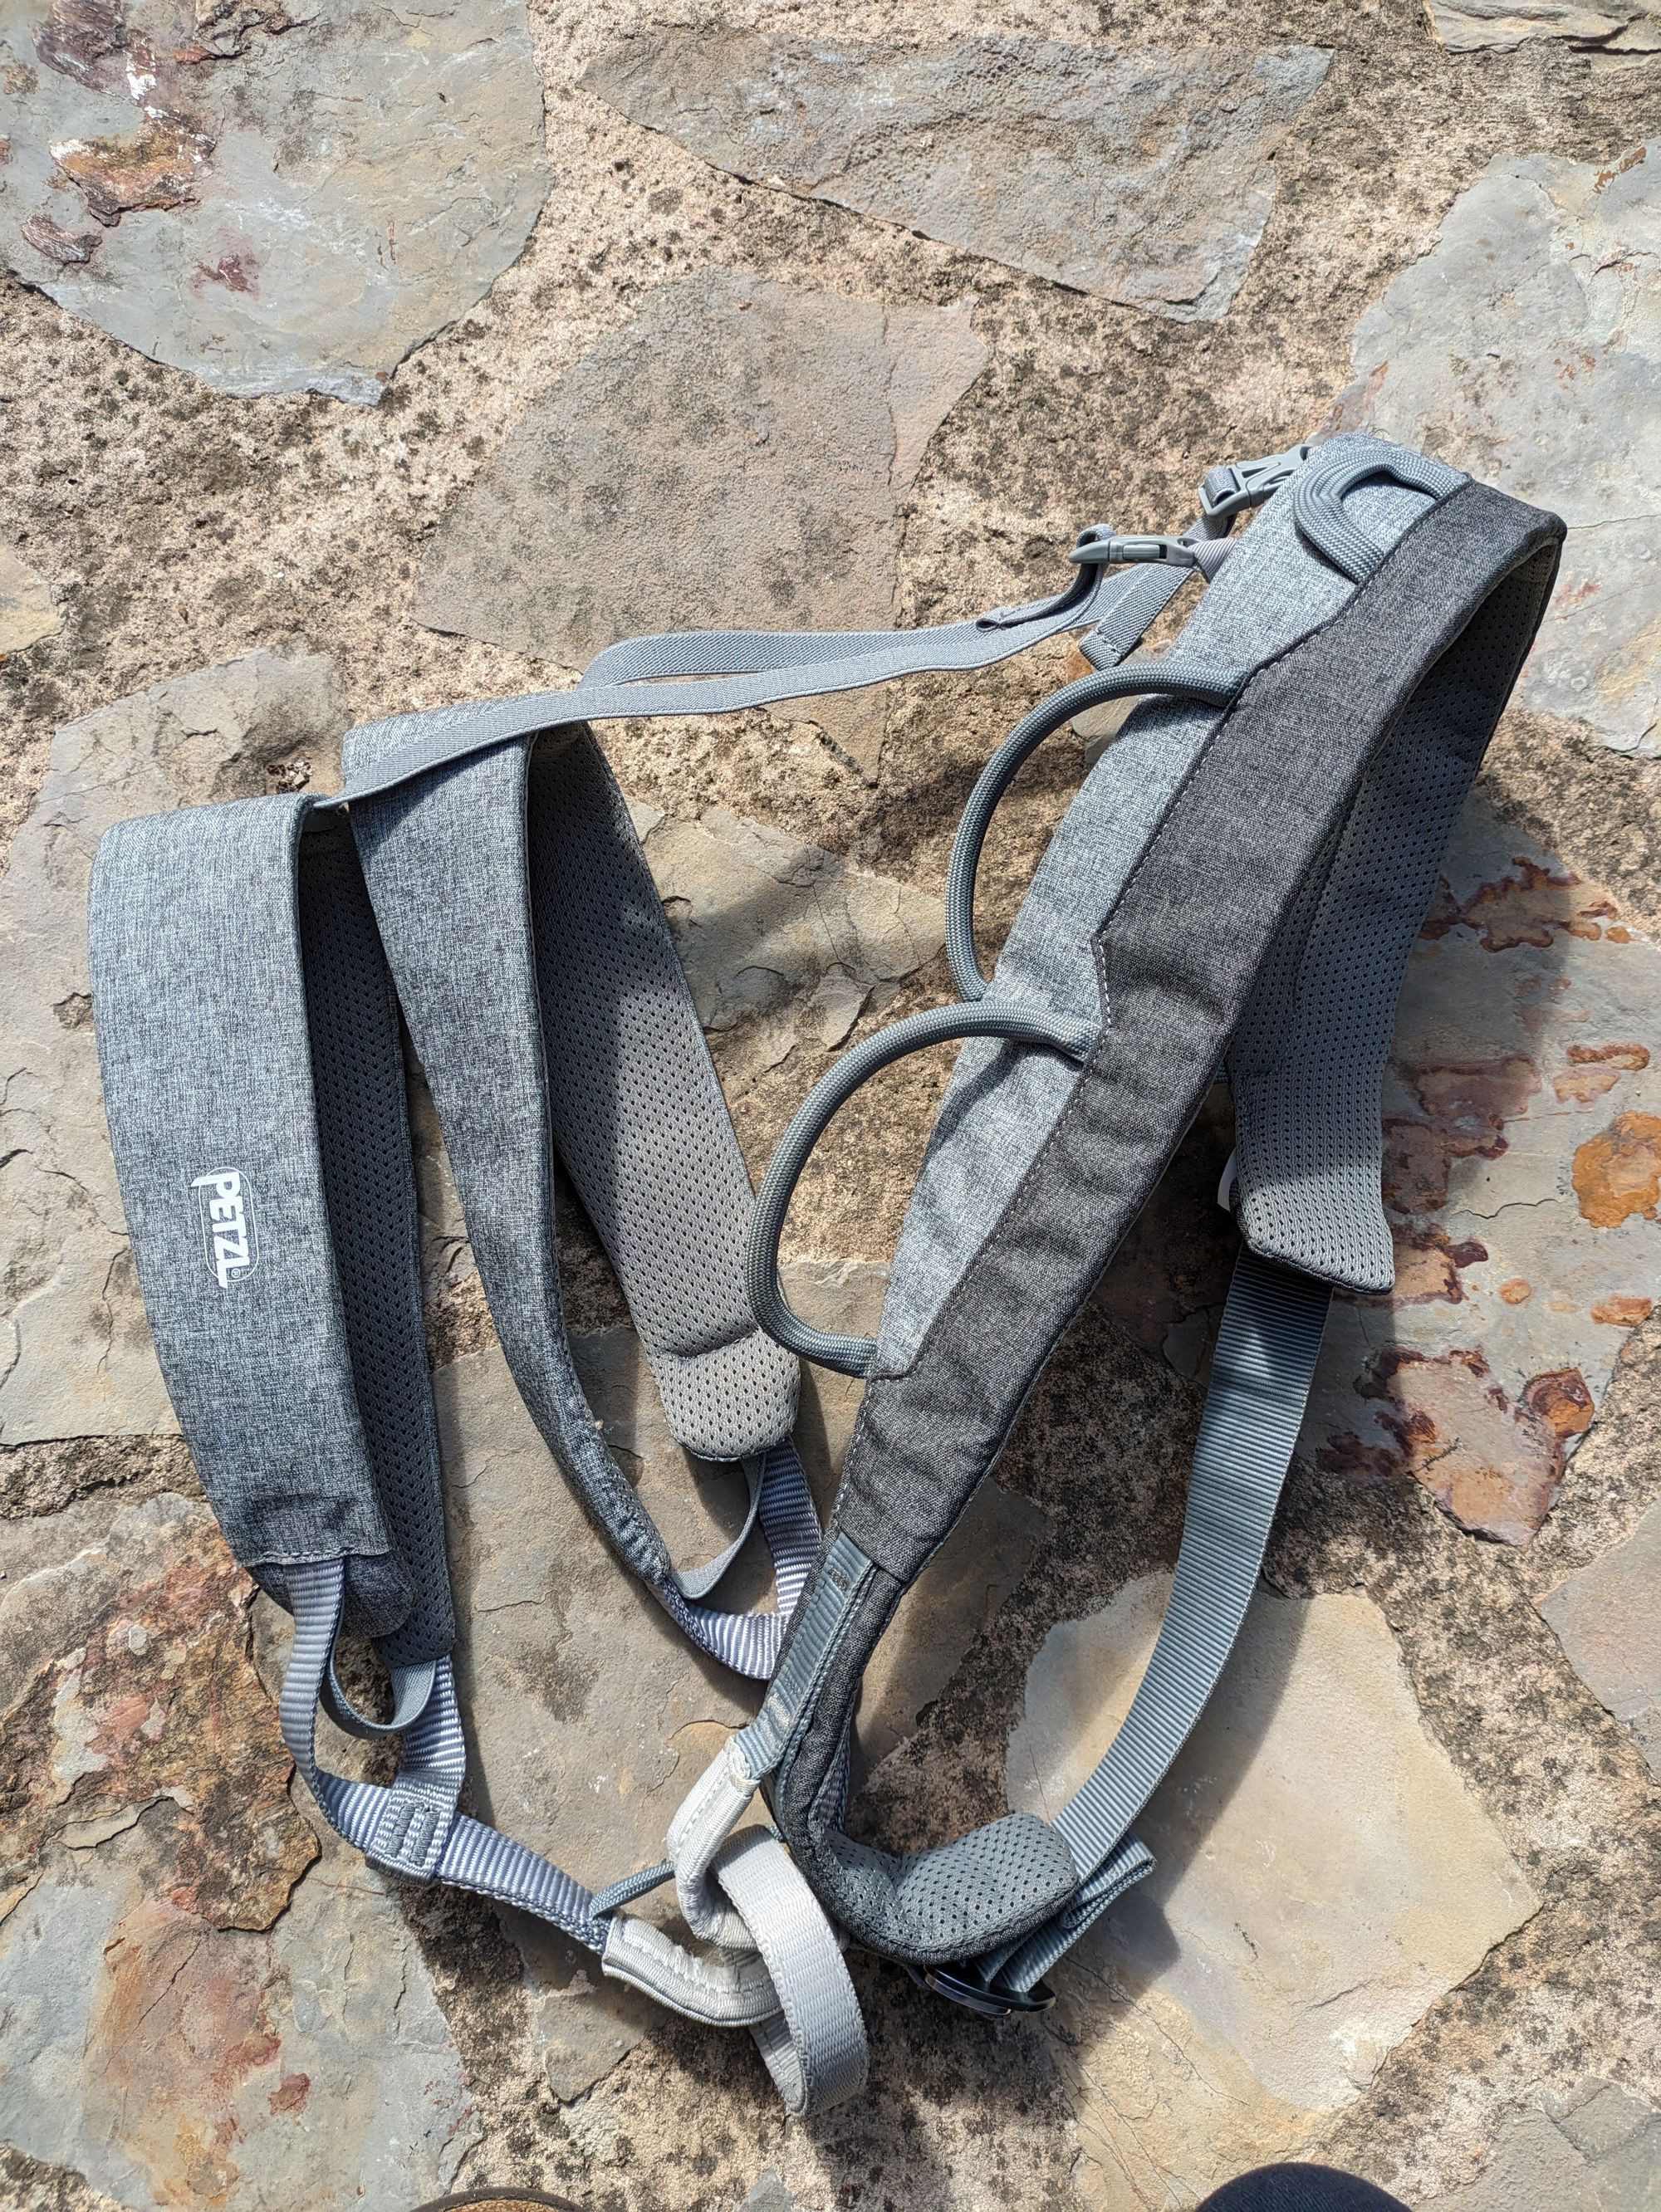 Review Petzl Sama climbing harness